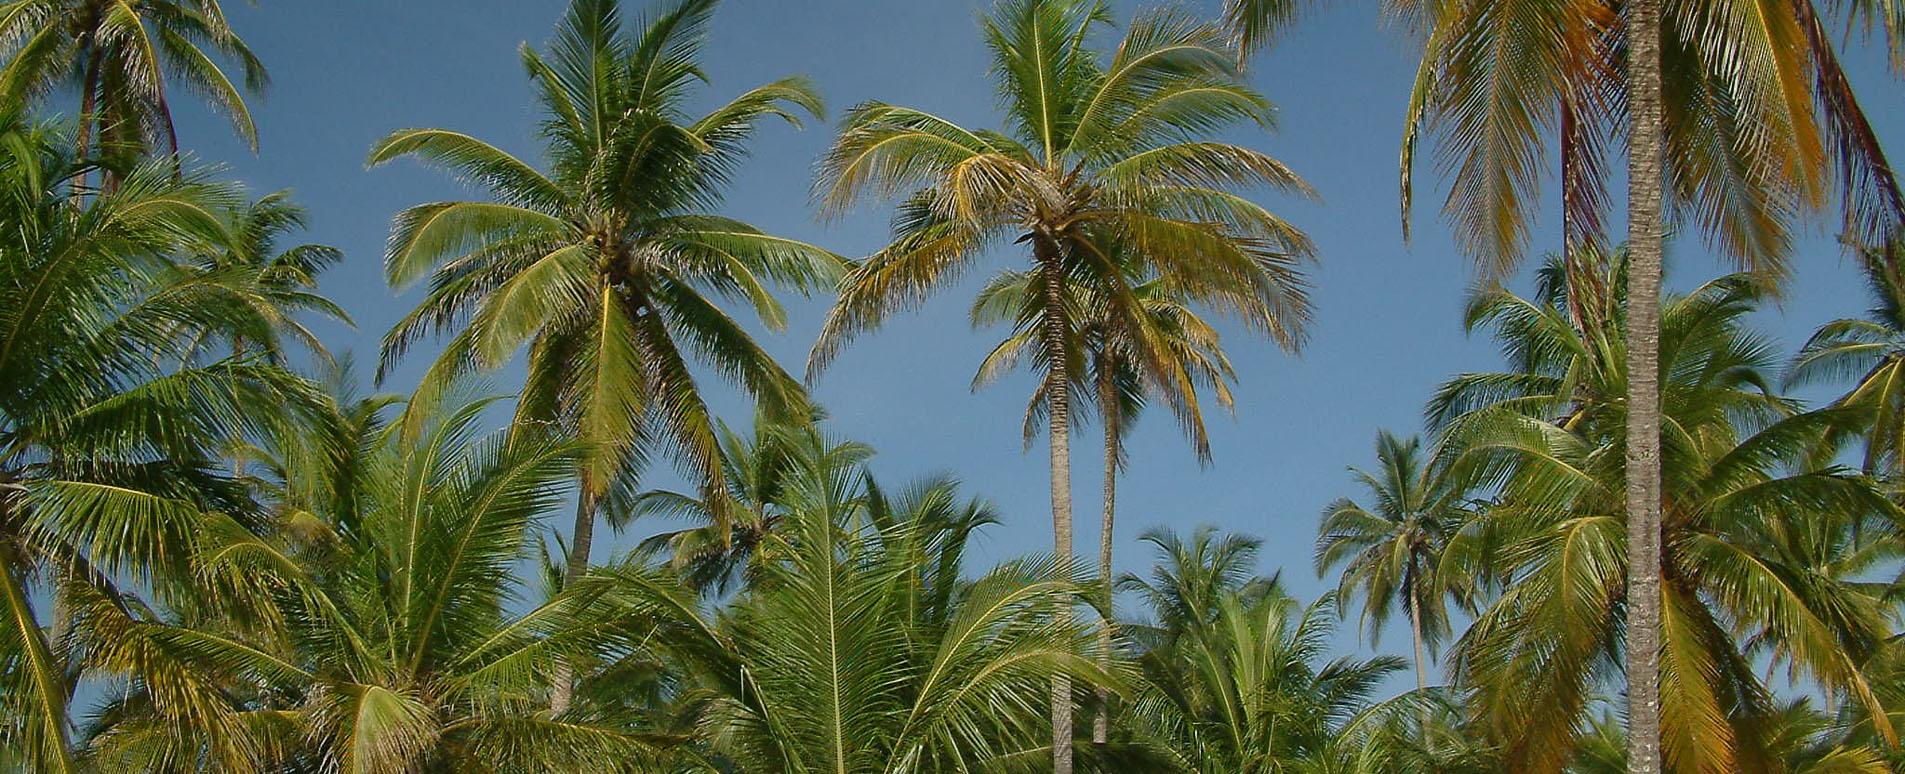 Pearl Islands Islas Perlas Panama